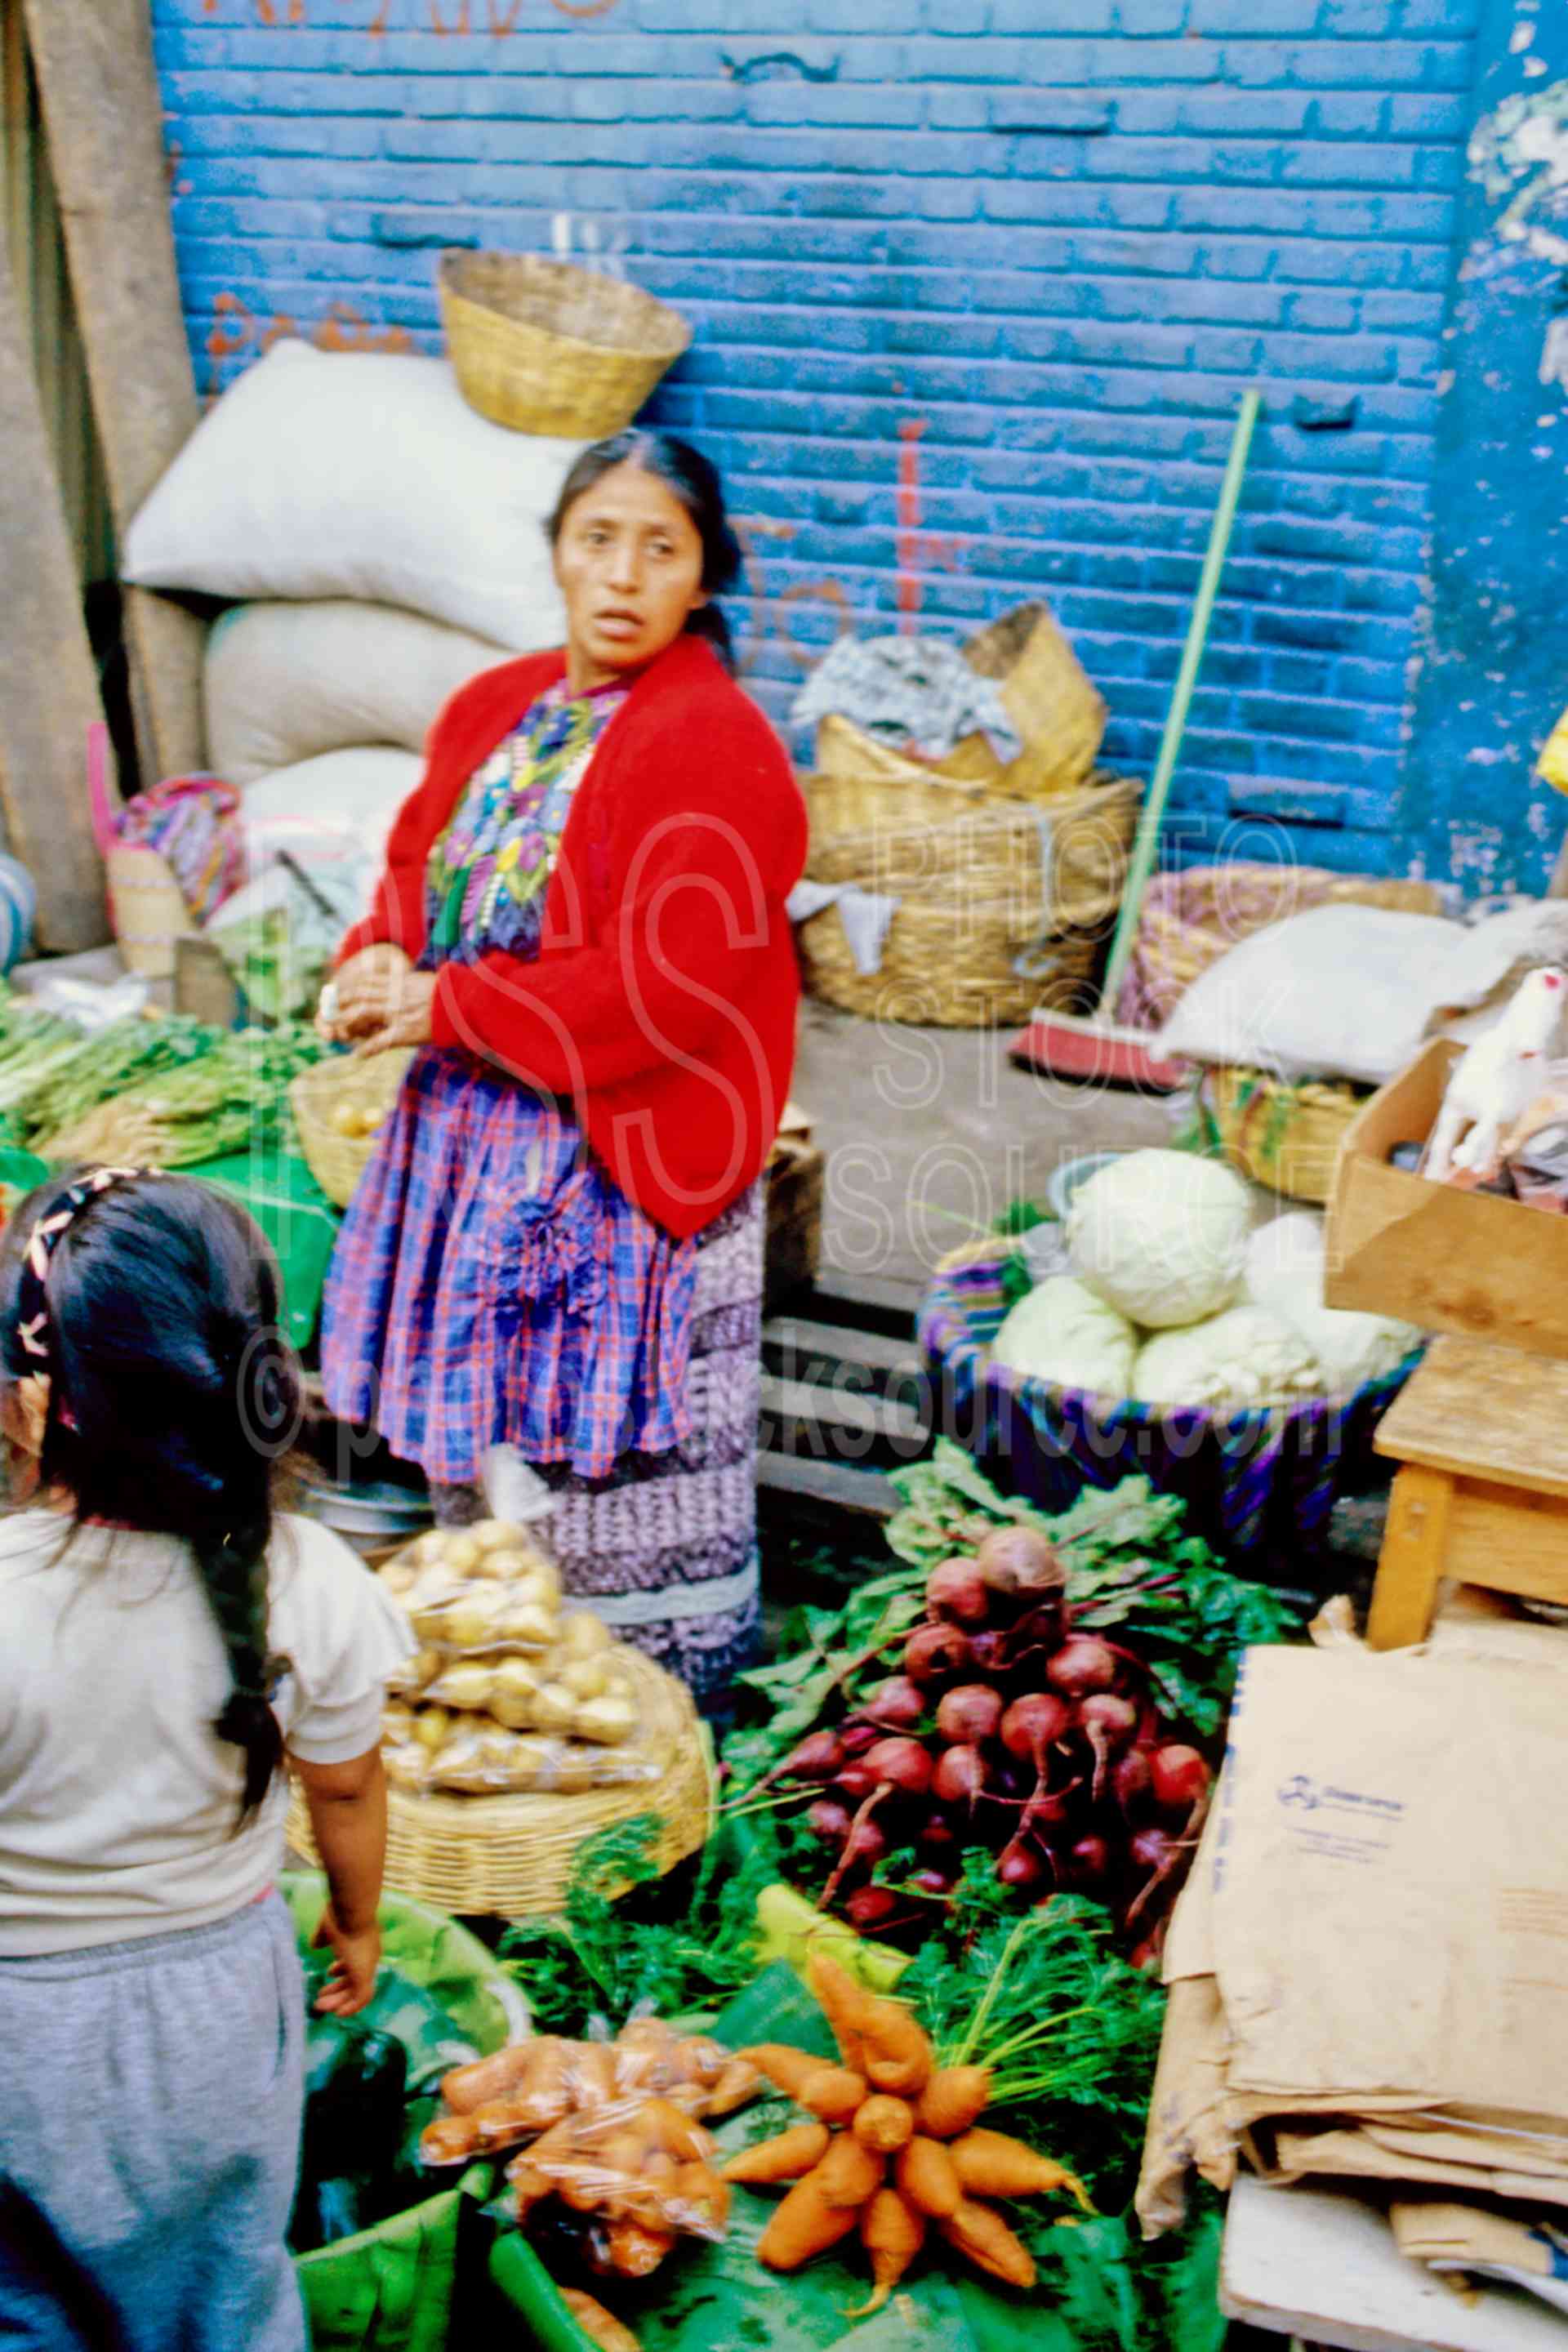 Fruit Vendor,fruit,vendor,market,guatemala markets